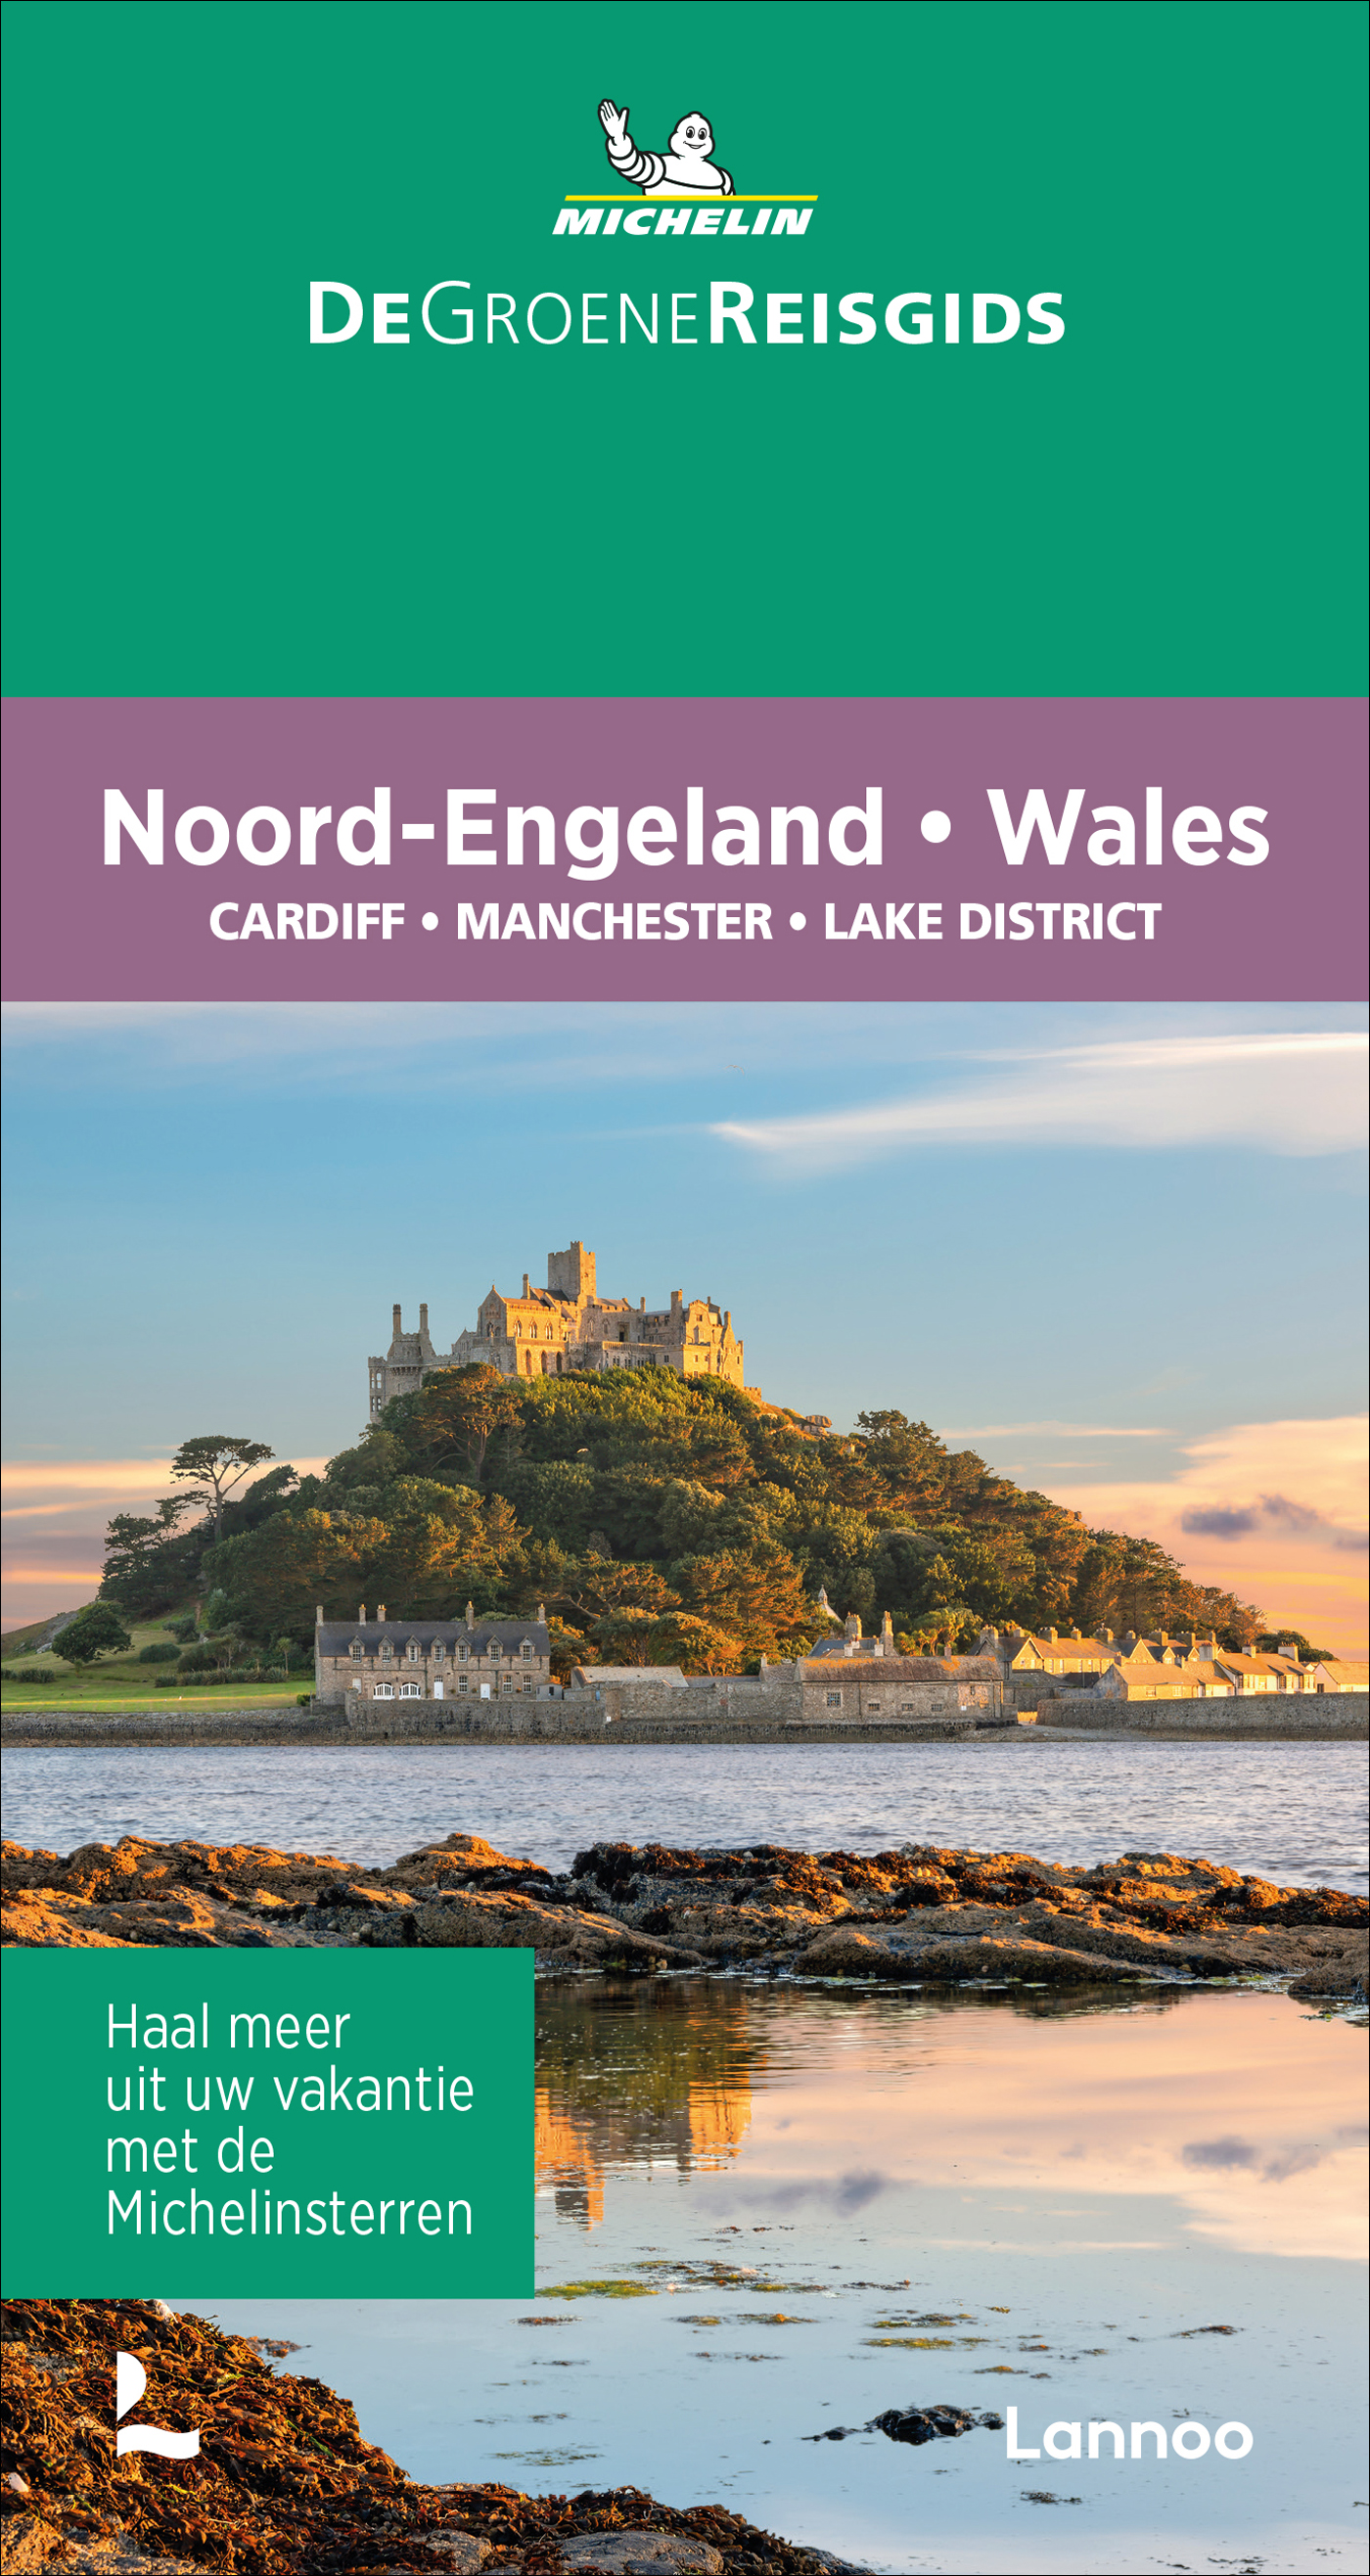 Online bestellen: Reisgids Michelin groene gids Noord-Engeland/Wales | Lannoo